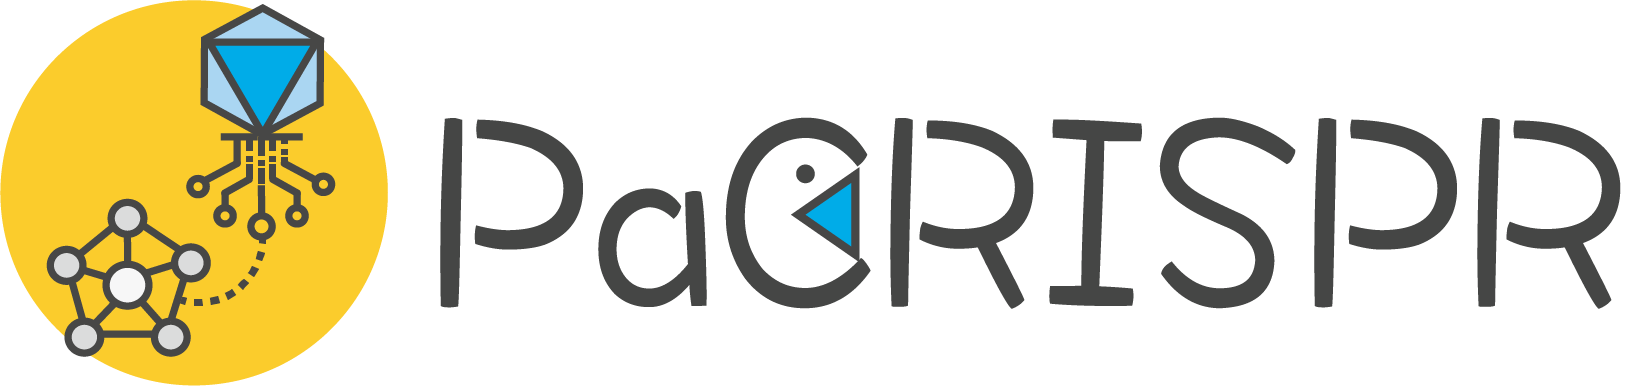 PaCRISPR logo